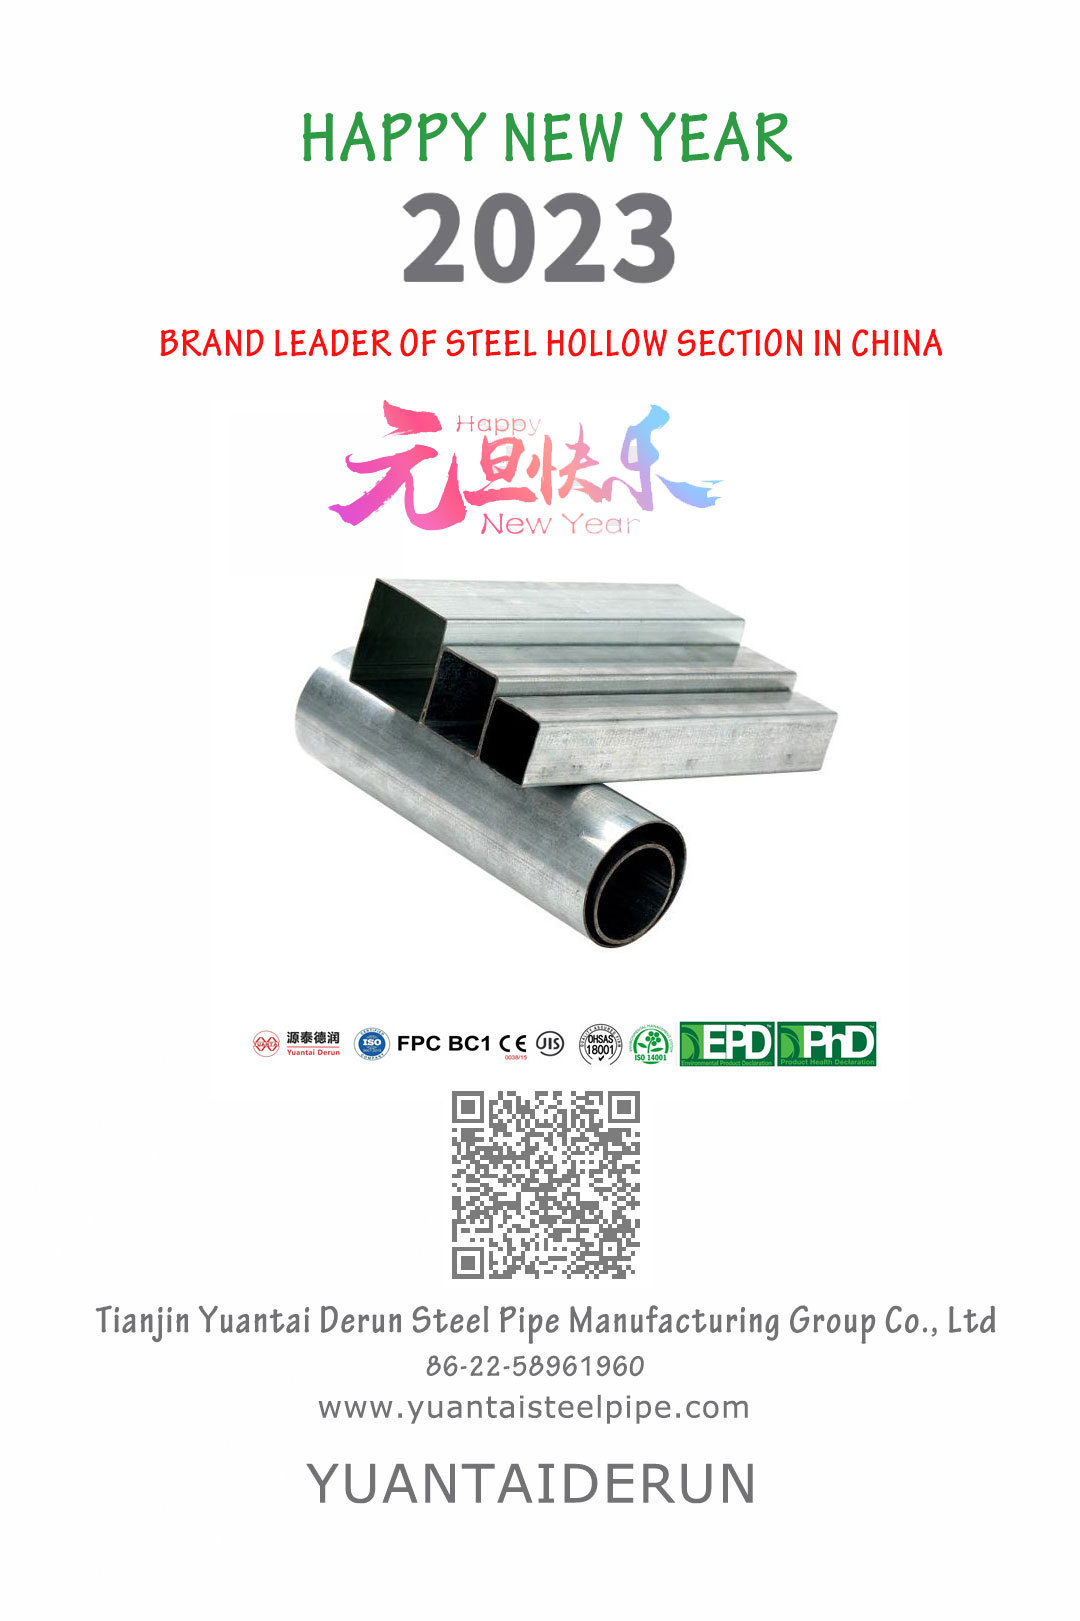 HAPPY NEW YEAR – Tianjin Yuantai Derun Steel Pipe Manufacturing Group Co., Ltd